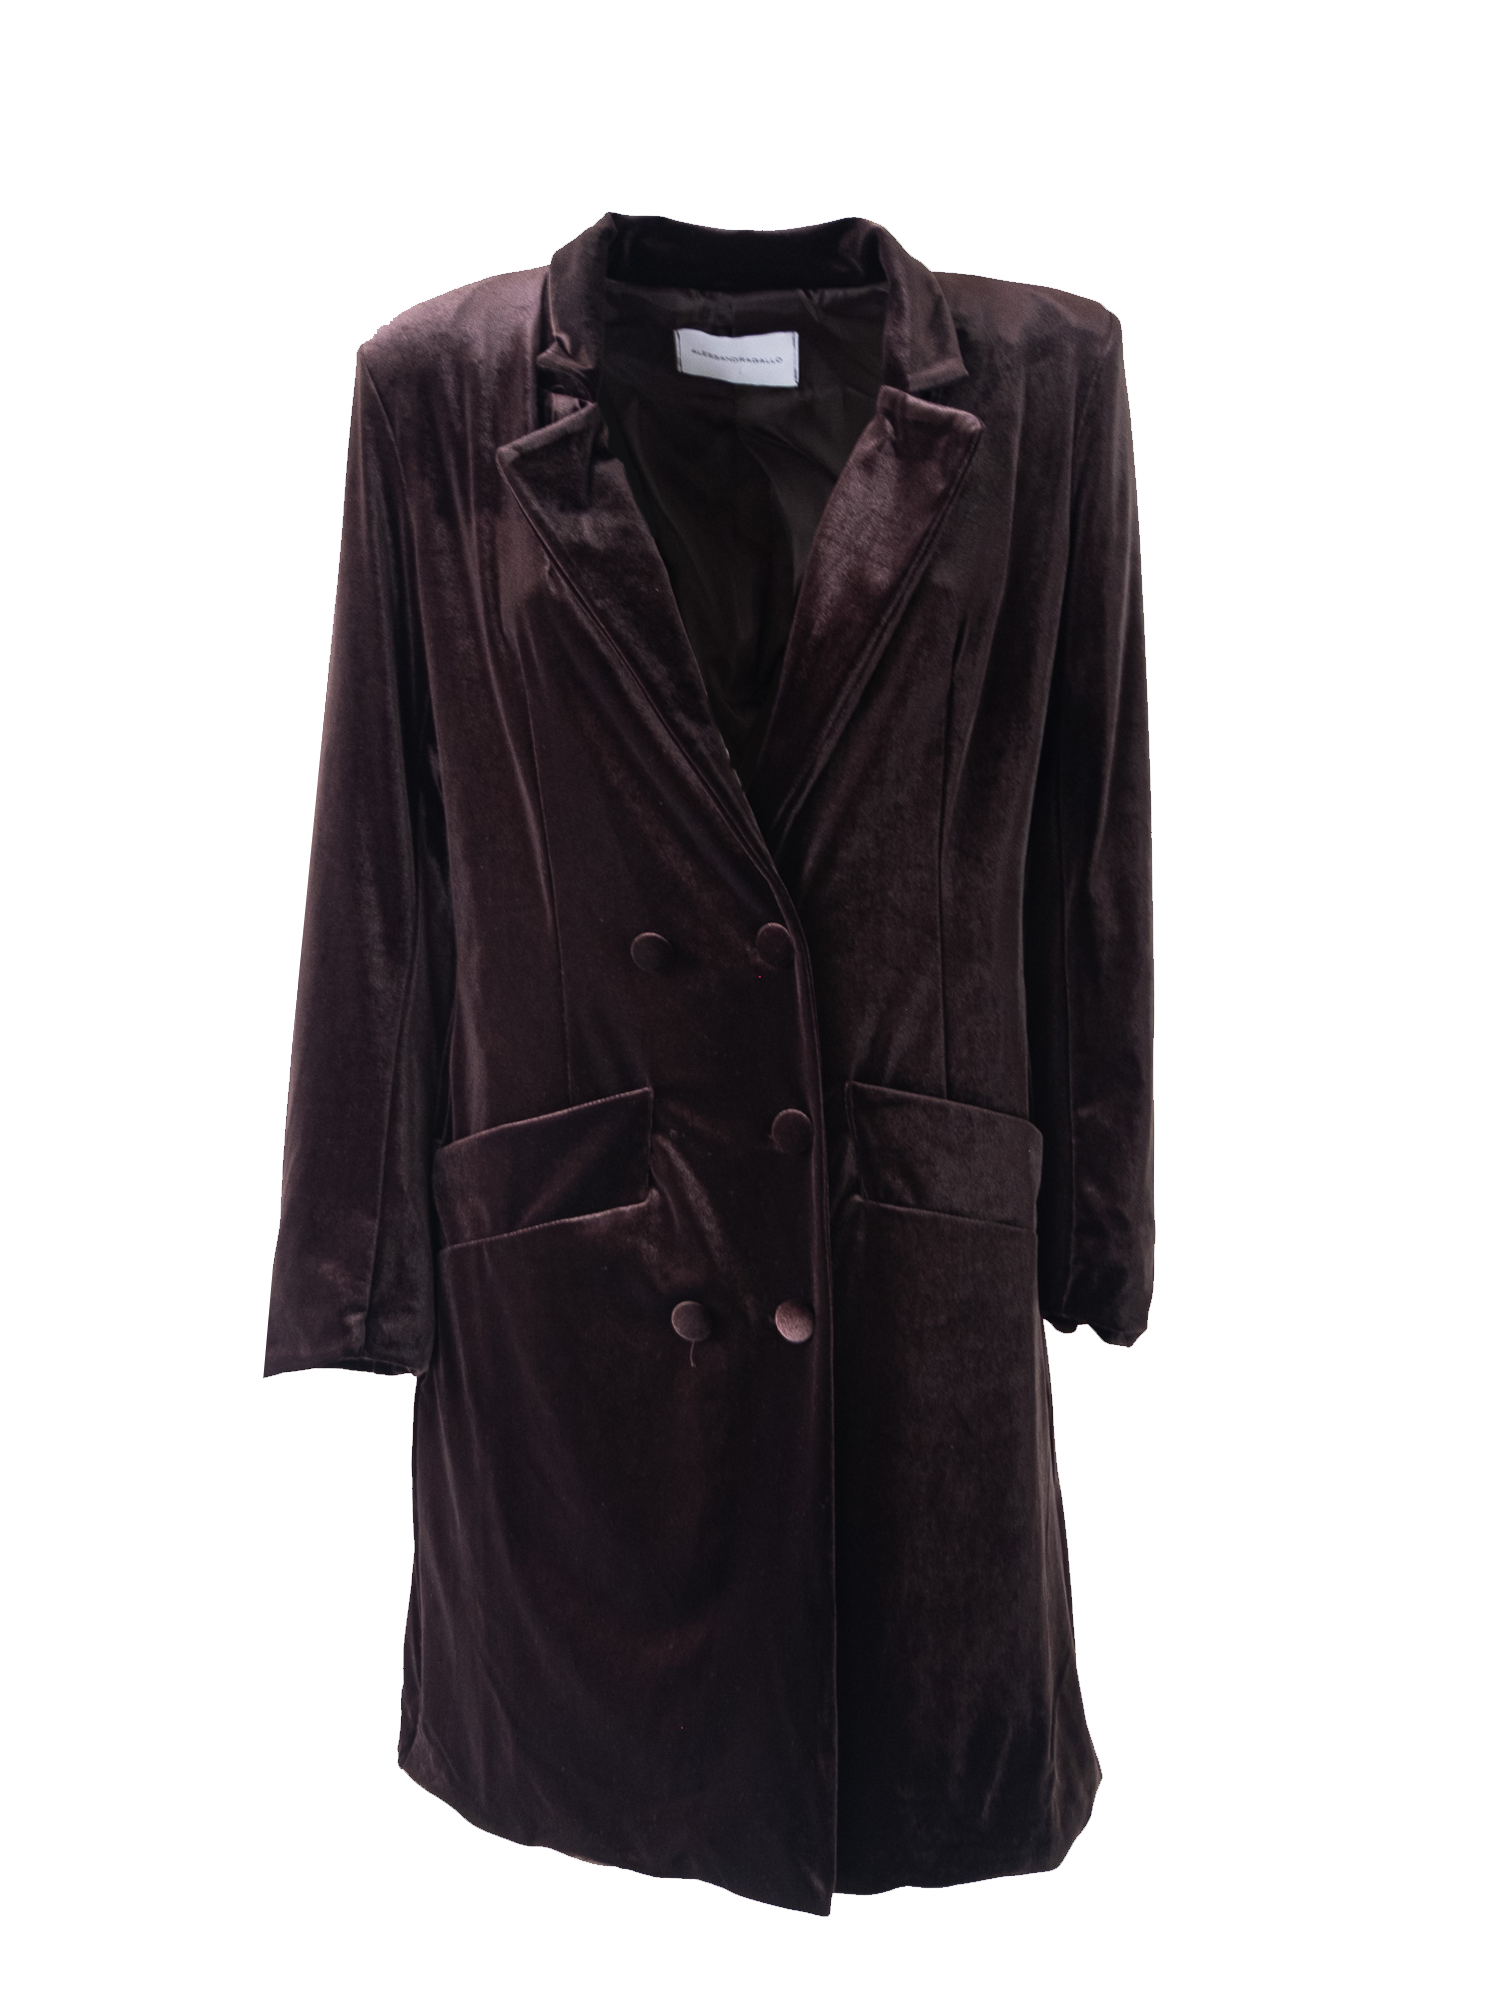 NORA - dress robe coat in brown chenille